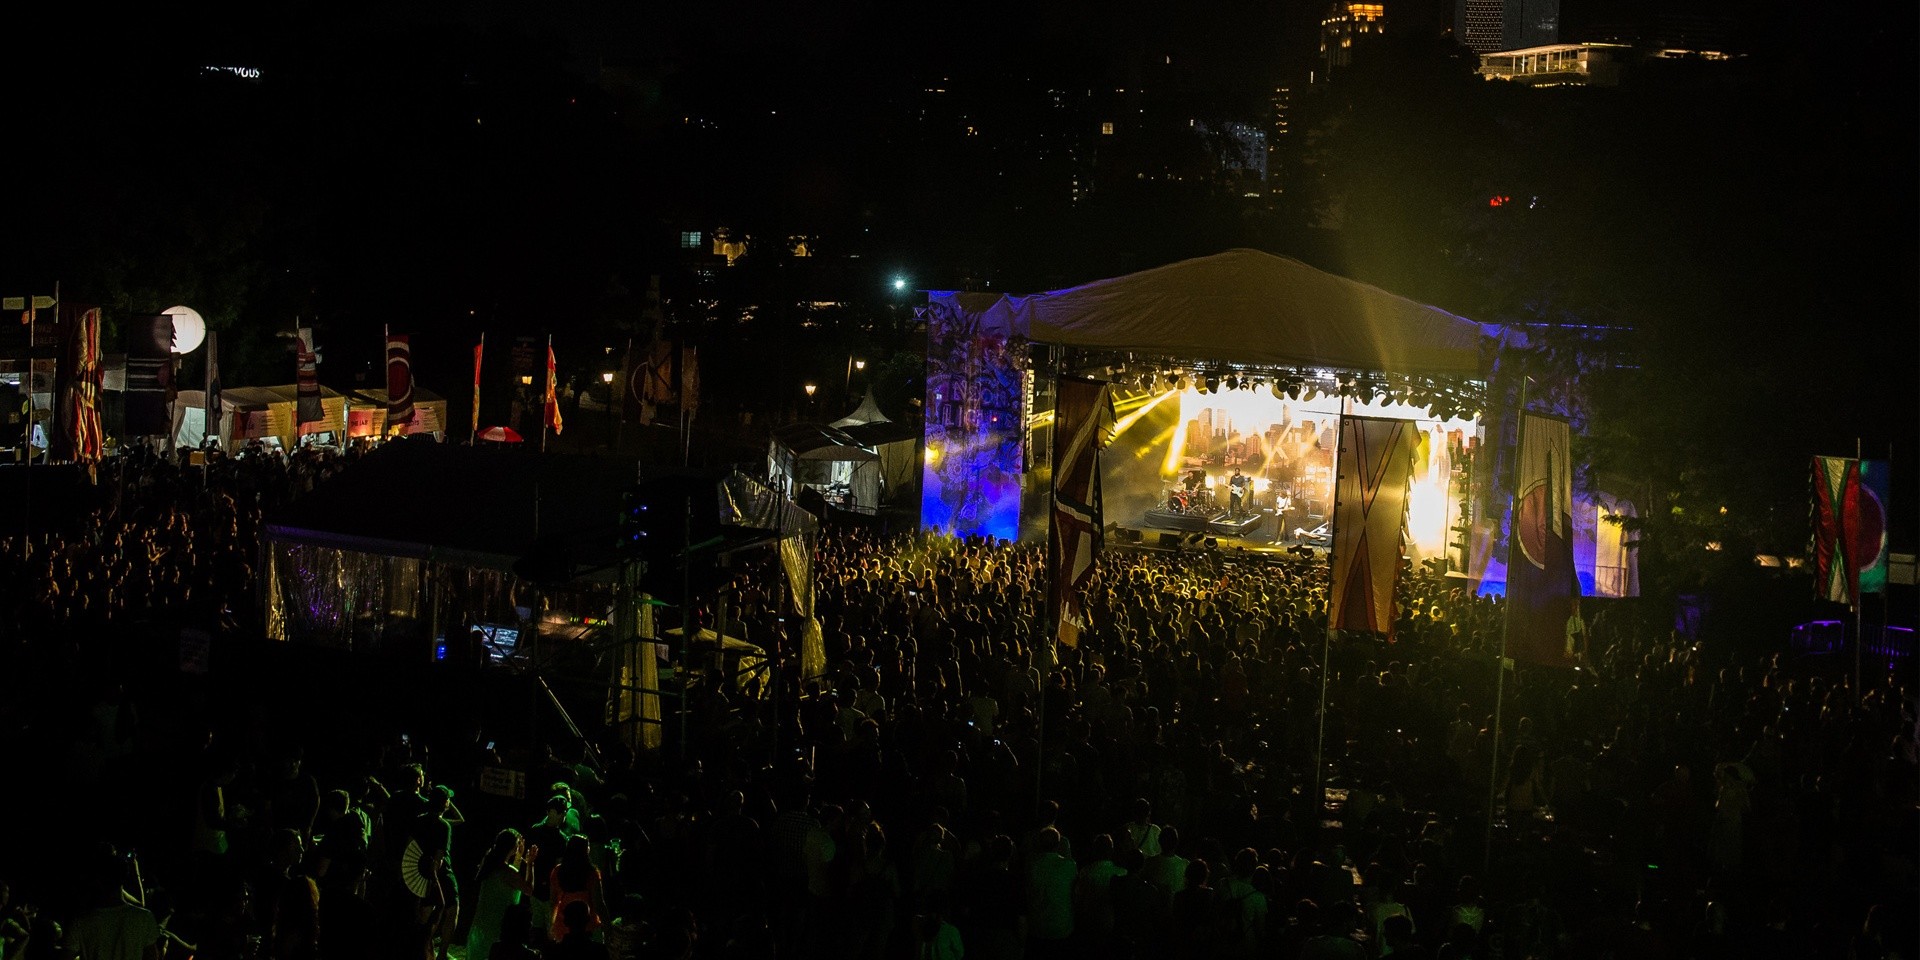 Neon Lights Festival will not be returning in 2017